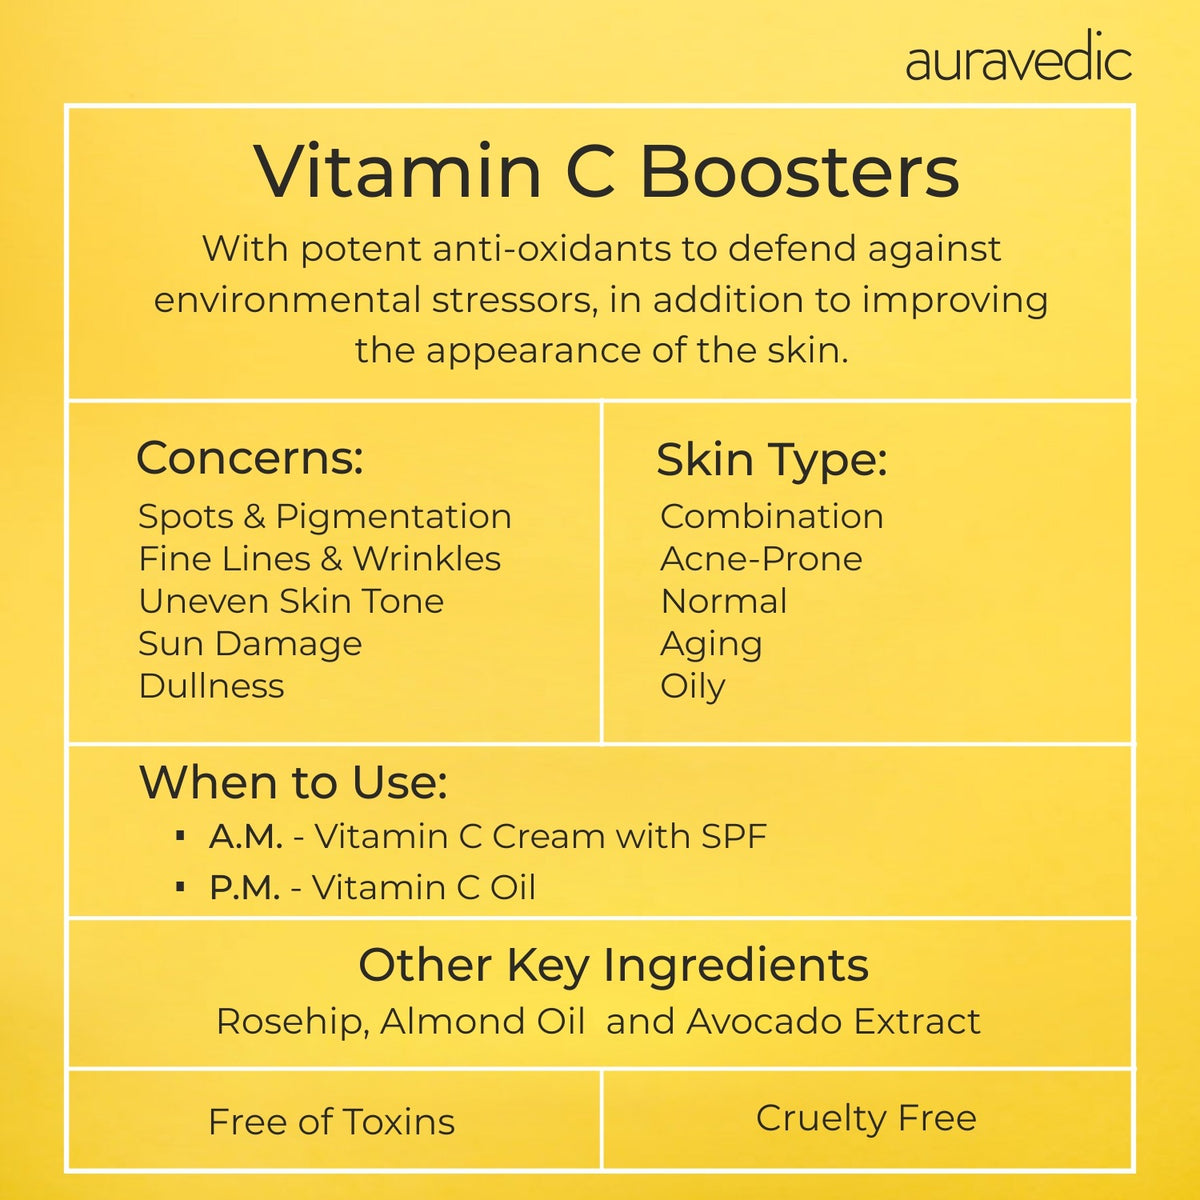 Vitamin C Boosters